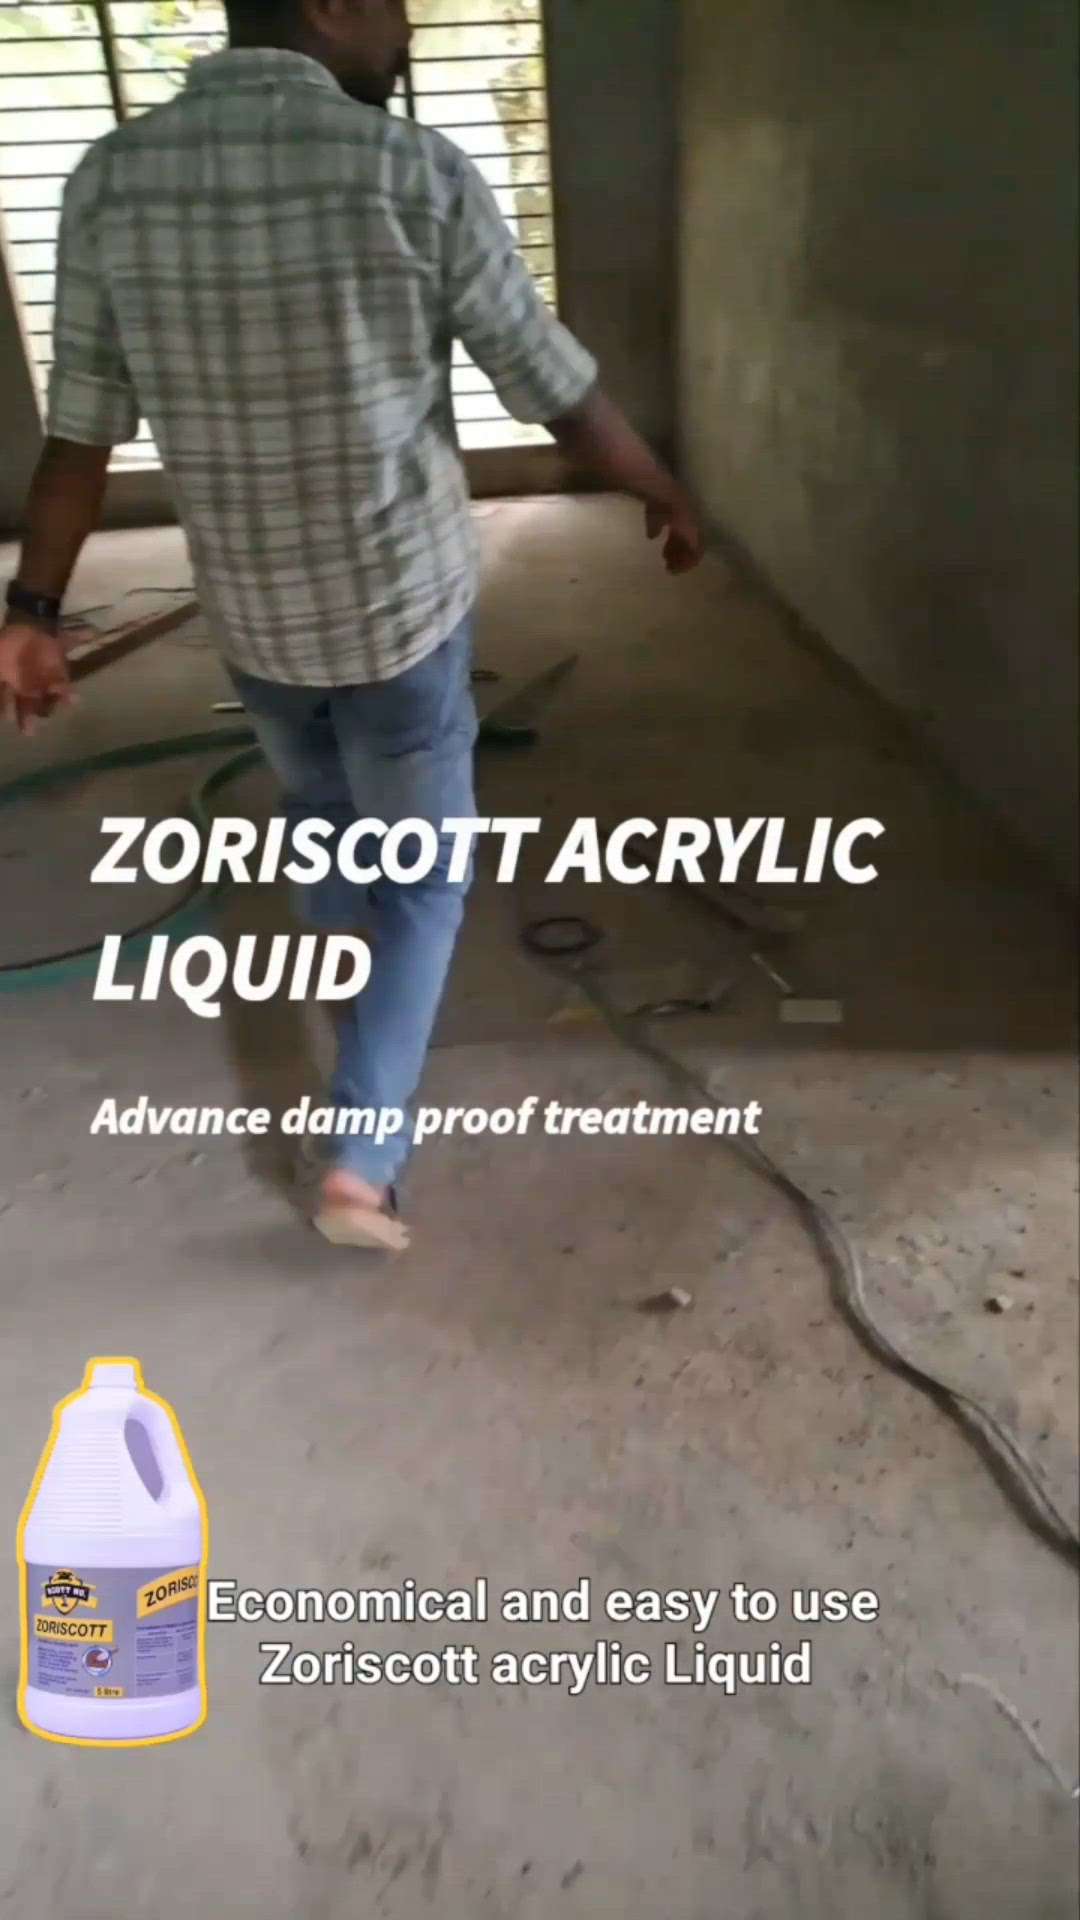 Advance damp proof treatment # #WaterProofing  #dampproofing  #Zoriscott